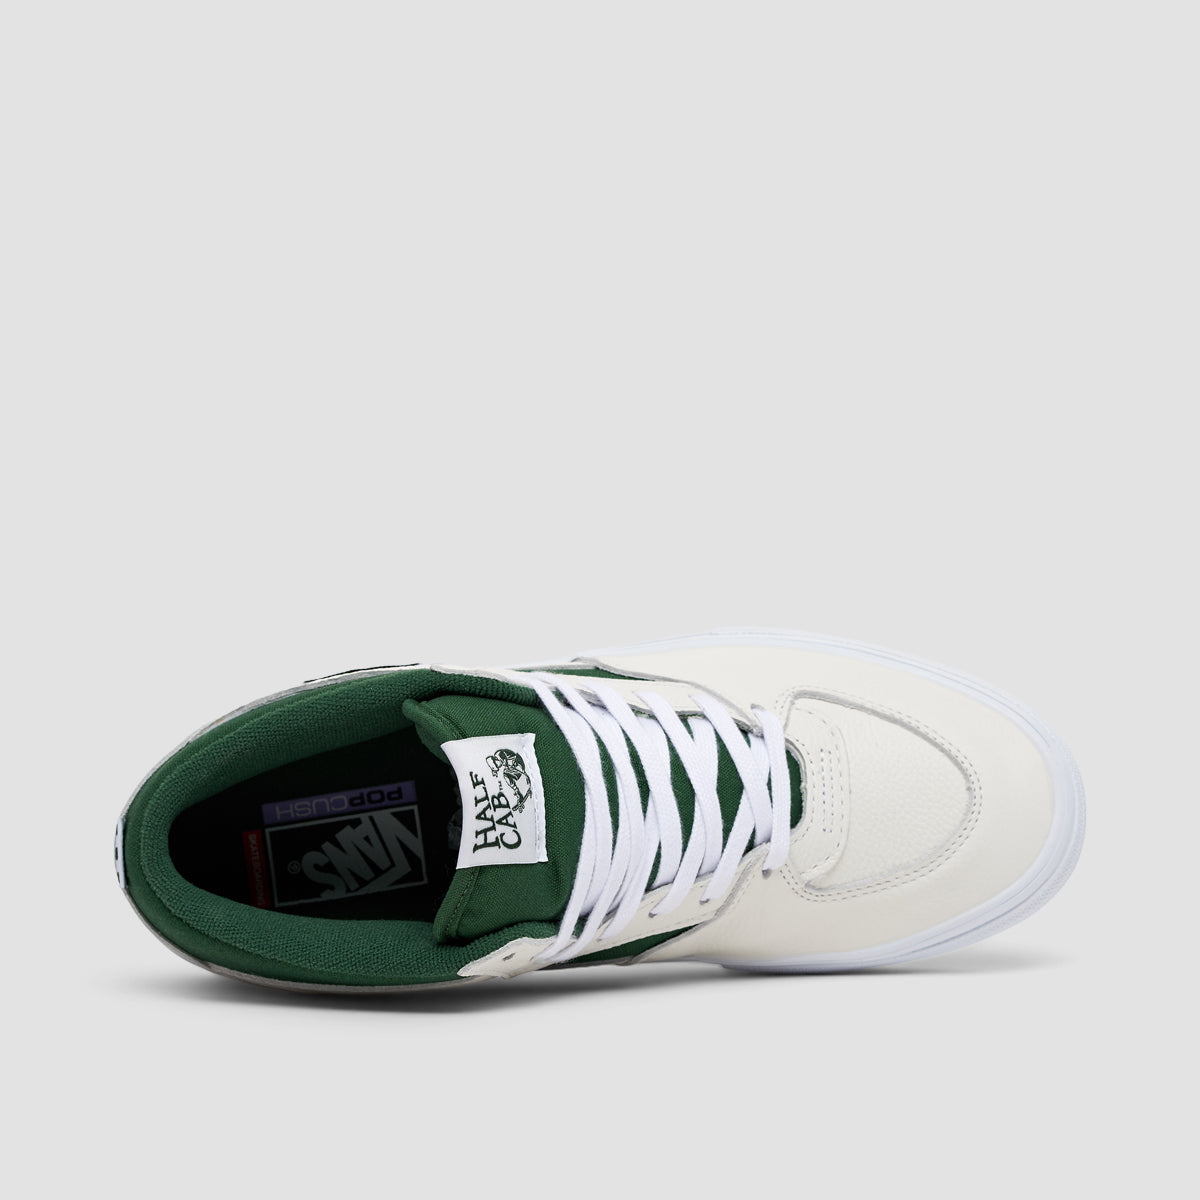 Vans Skate Half Cab Shoes - White/Green